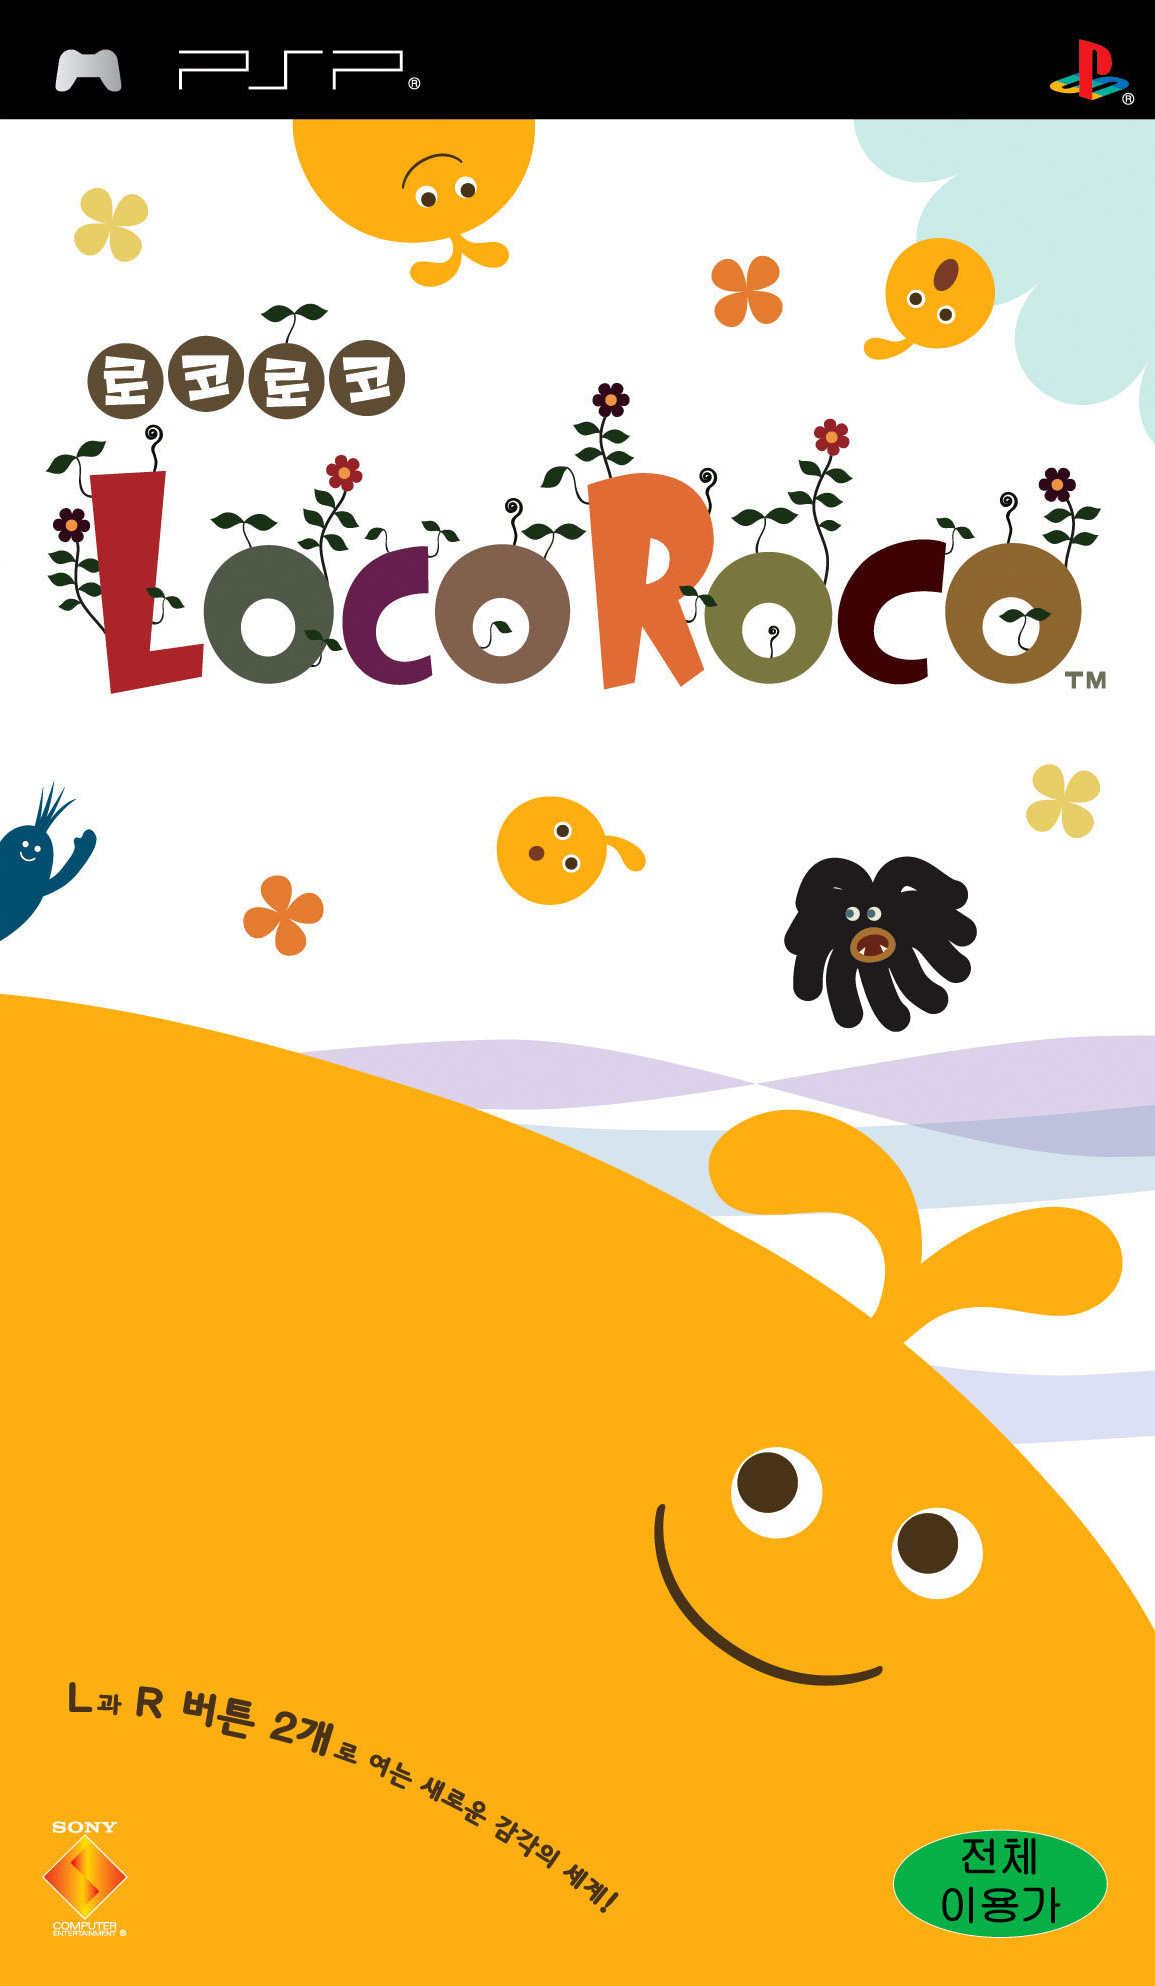 LocoRoco